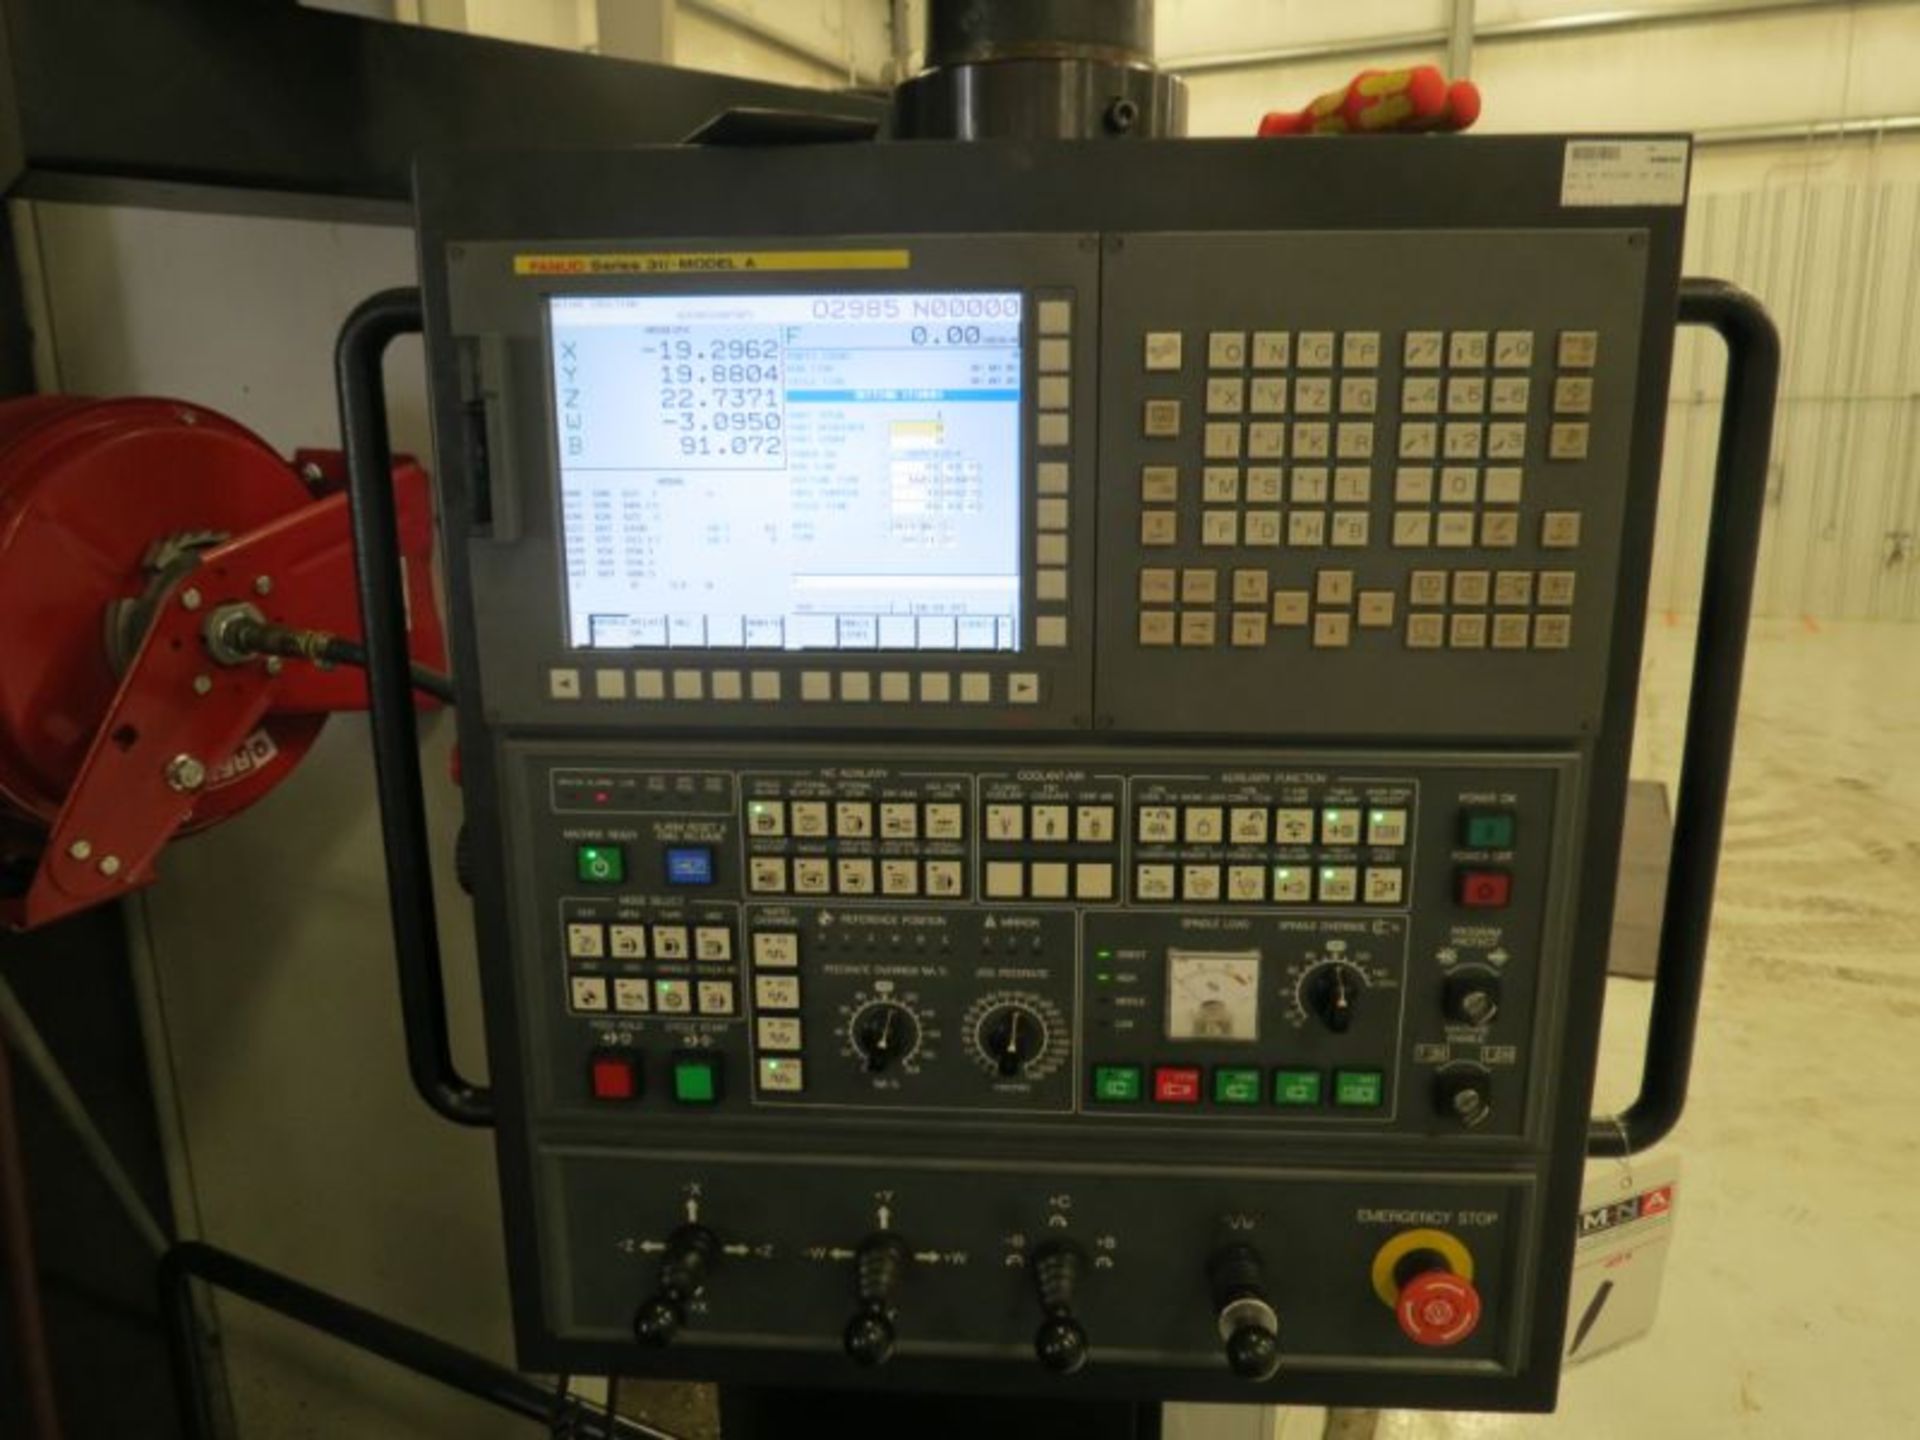 5"Doosan DBC130 CNC Horizontal Boring & Milling Machine, Fanuc 31-iA Ctrl *Located in Broussard, LA* - Image 23 of 27